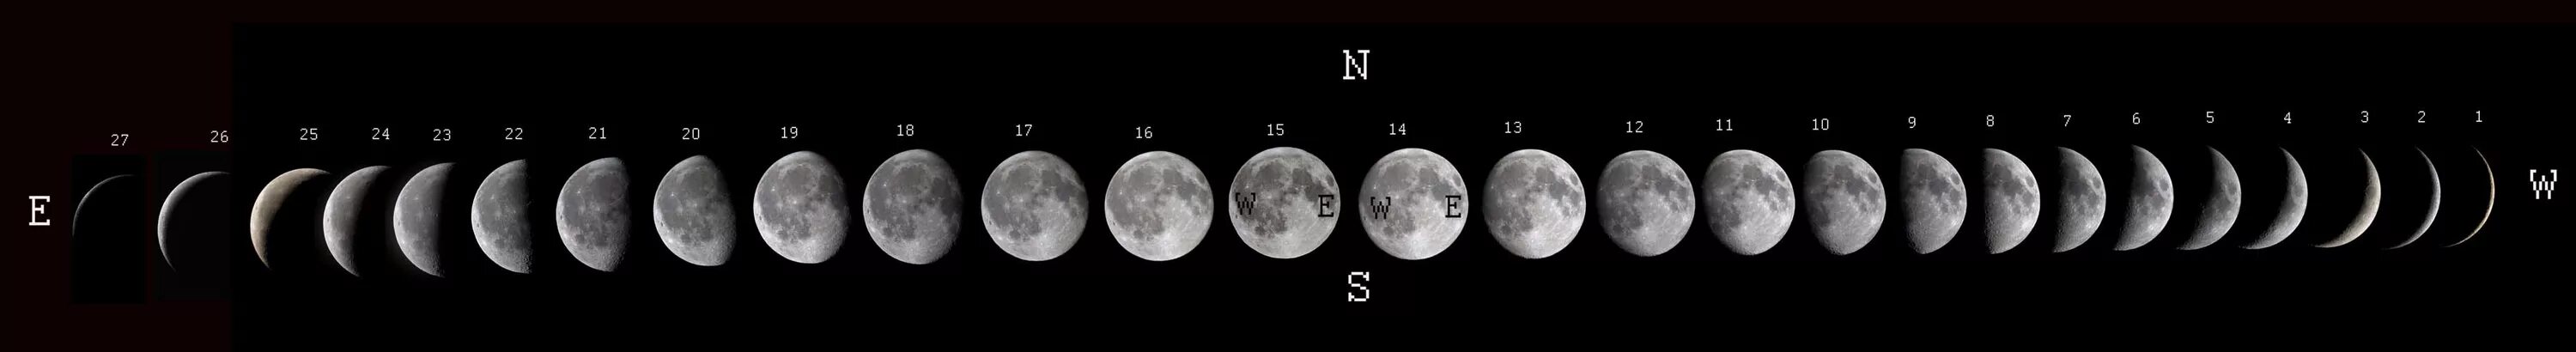 Период 3 луны. Фазы Луны. Разные формы Луны. Фазы Луны фото. Цикл лунных фаз.